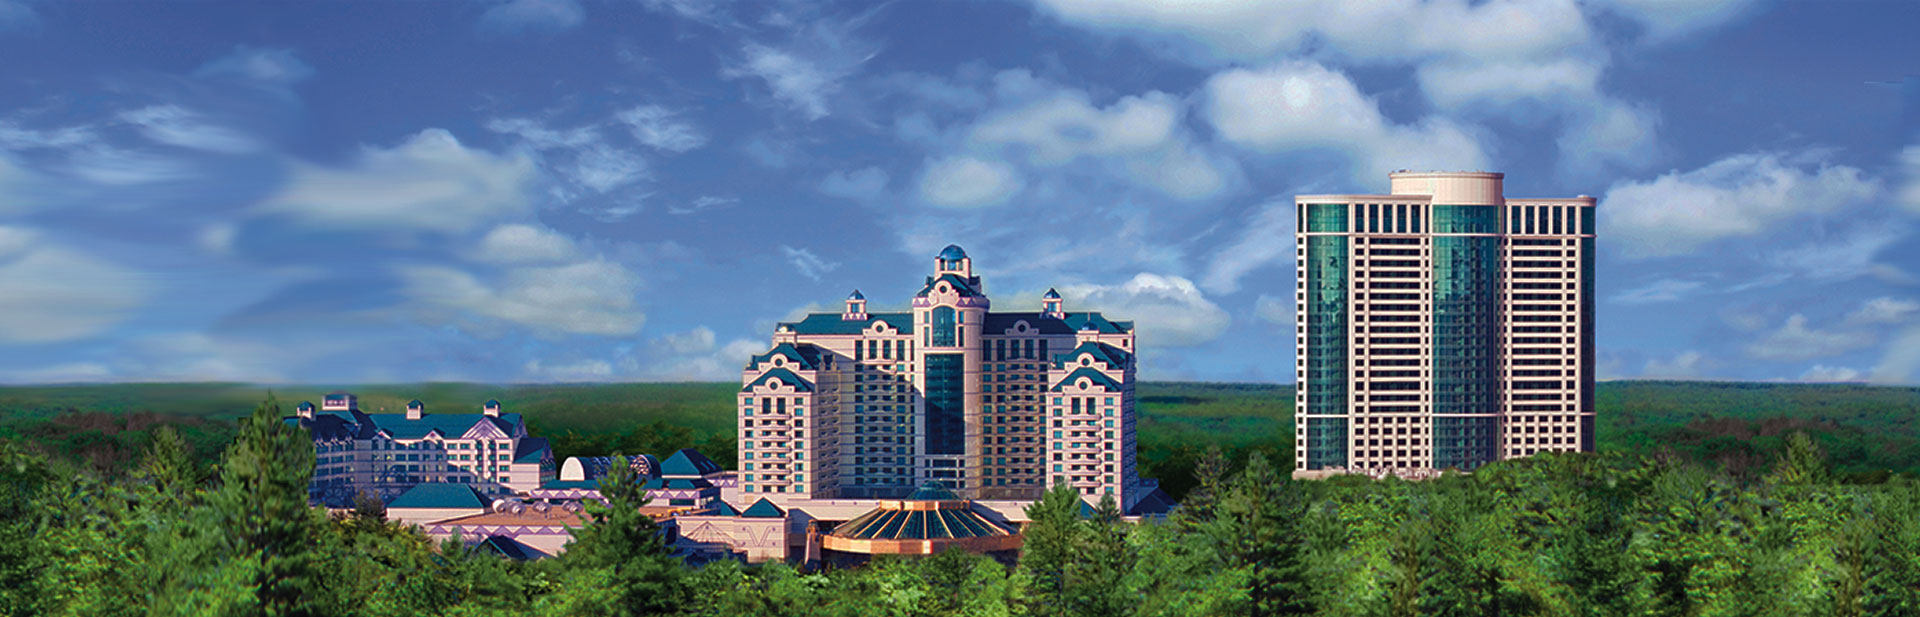 Connecticut Casino Resorts